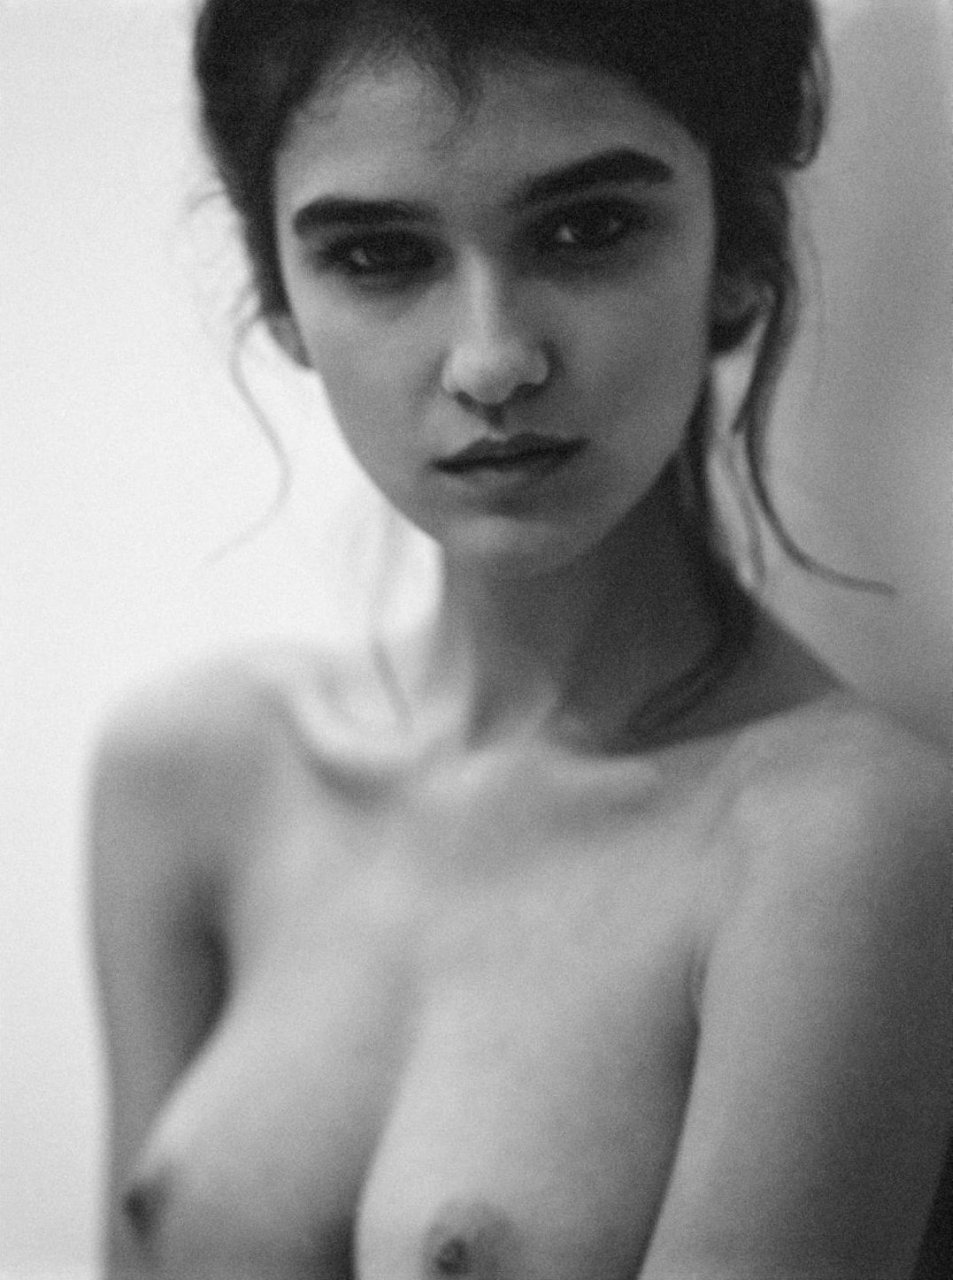 Paula bulczynska topless